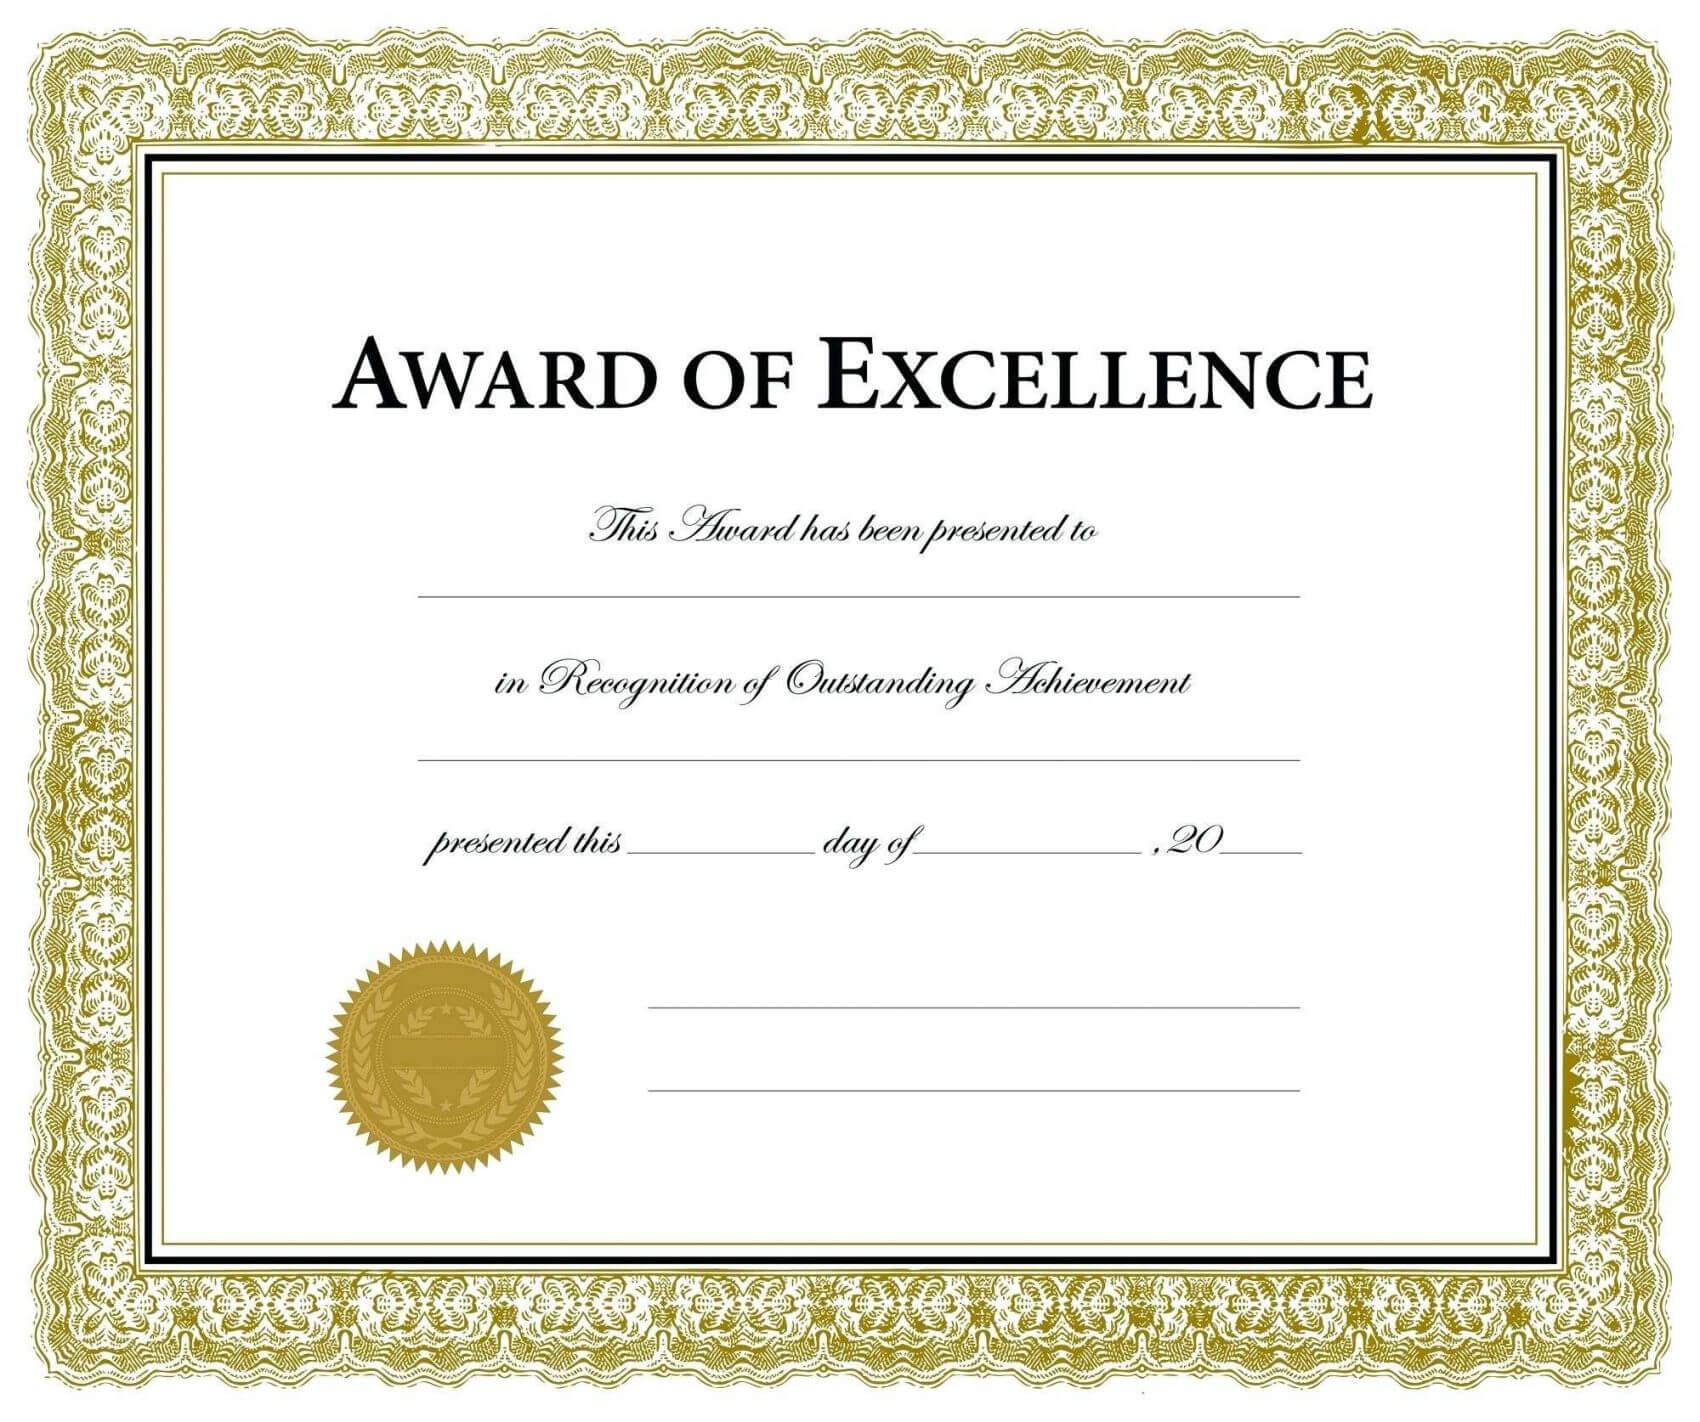 Blank Award Certificate Templates Word - Professional ...
 Blank Certificate Templates For Word Free